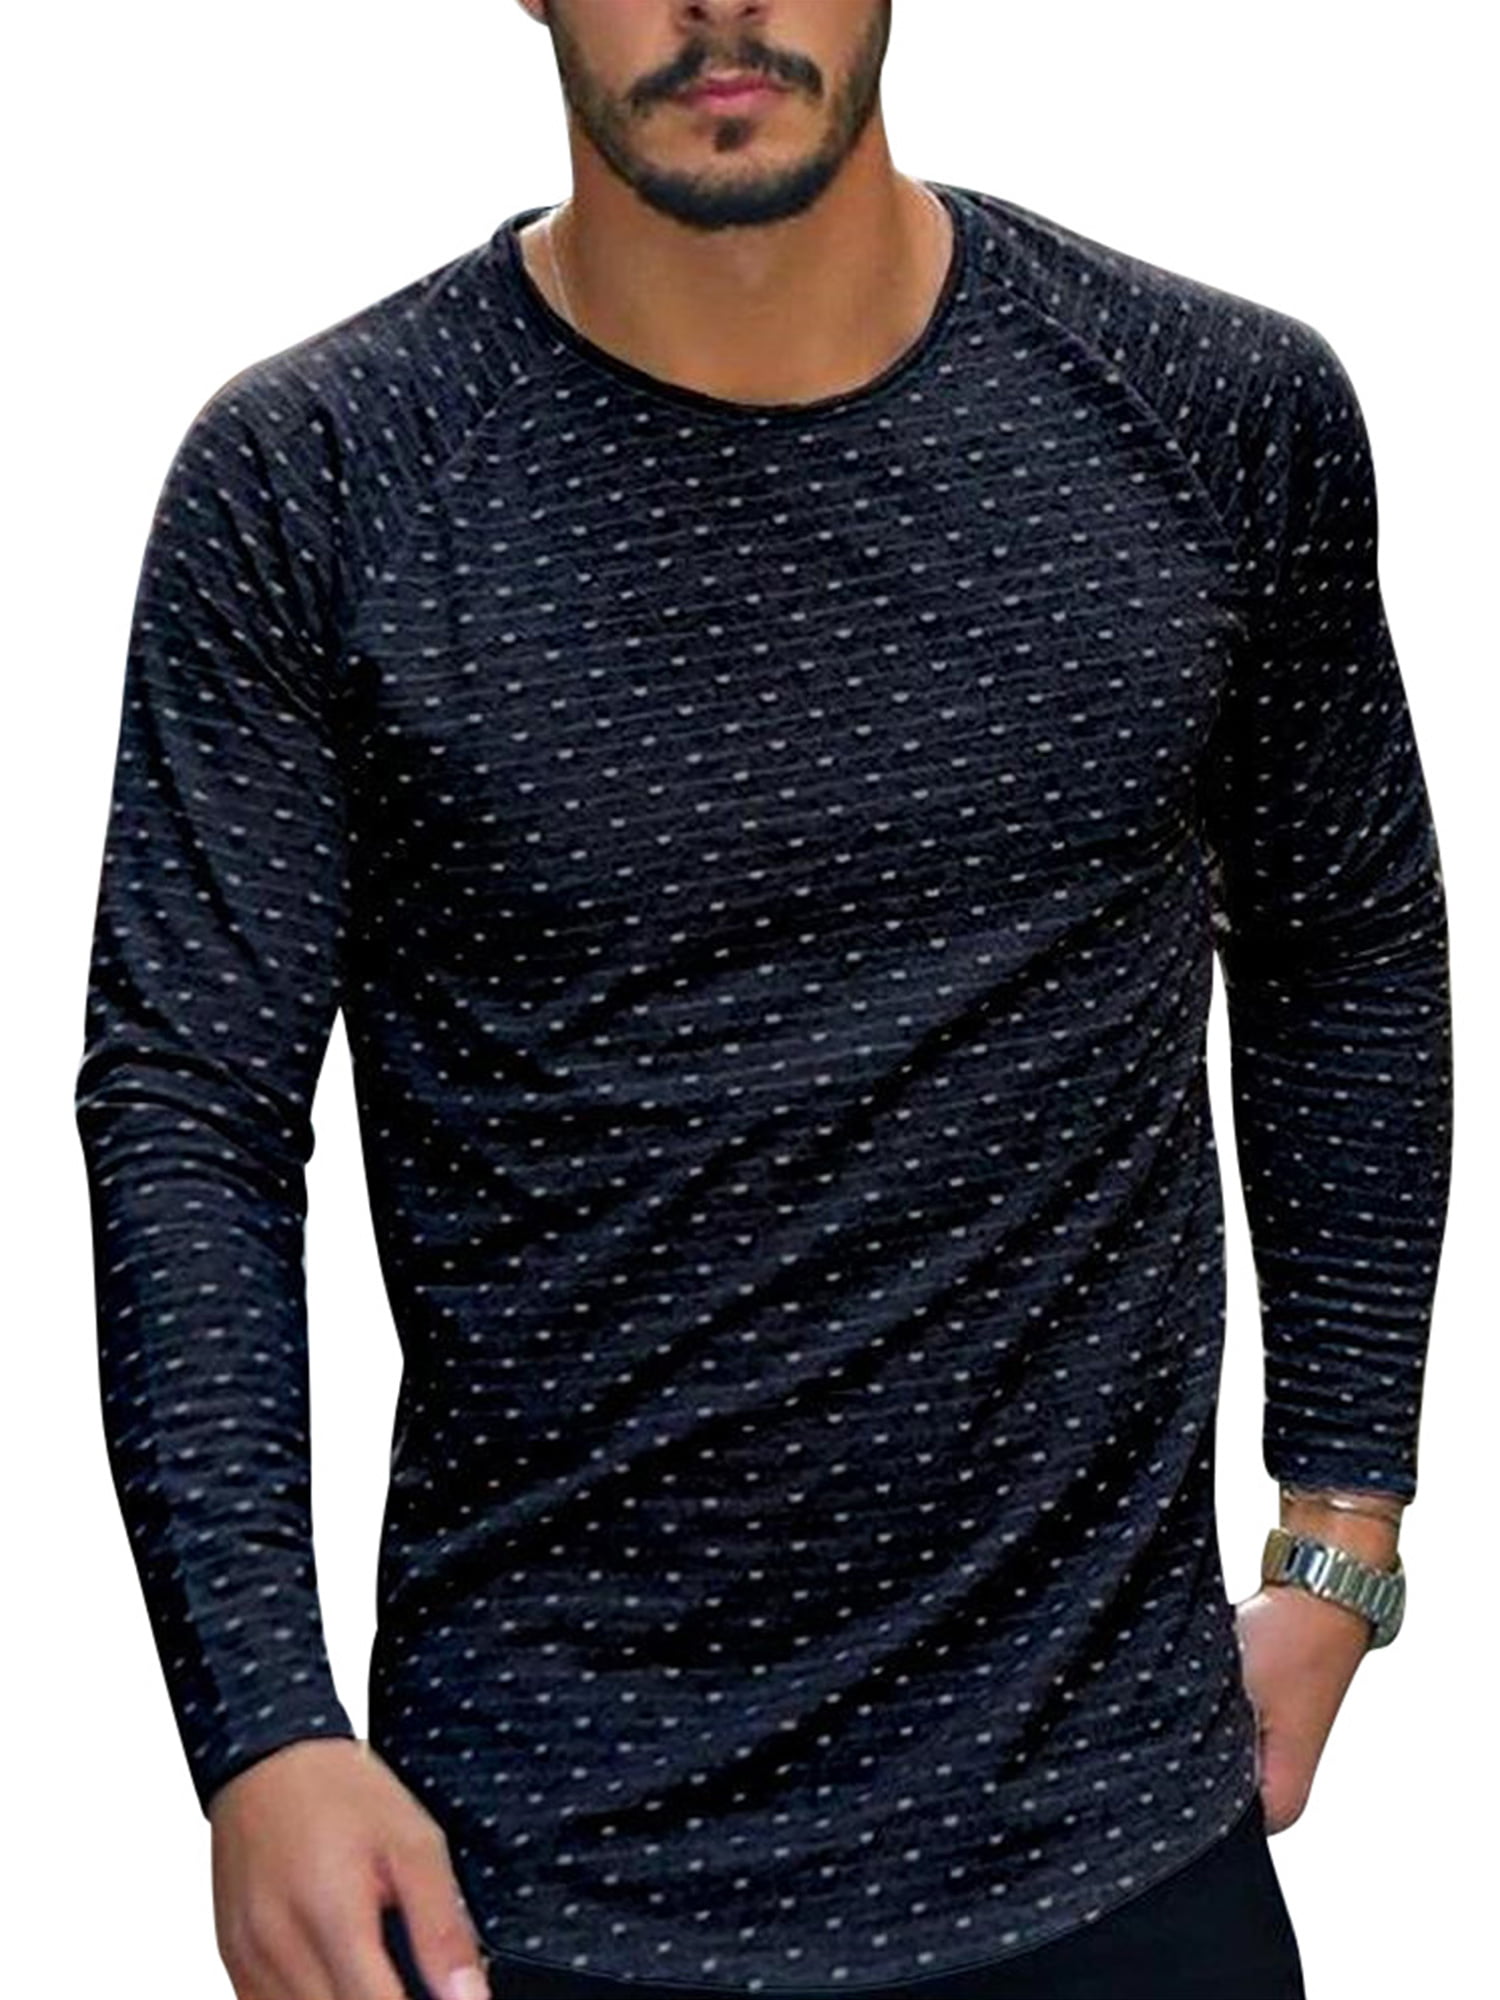 Thermal Pullover,Mens Casual Long Sleeve Zipper Irregular Hem Sweatershirt Top Blouse for Men Teen Boys